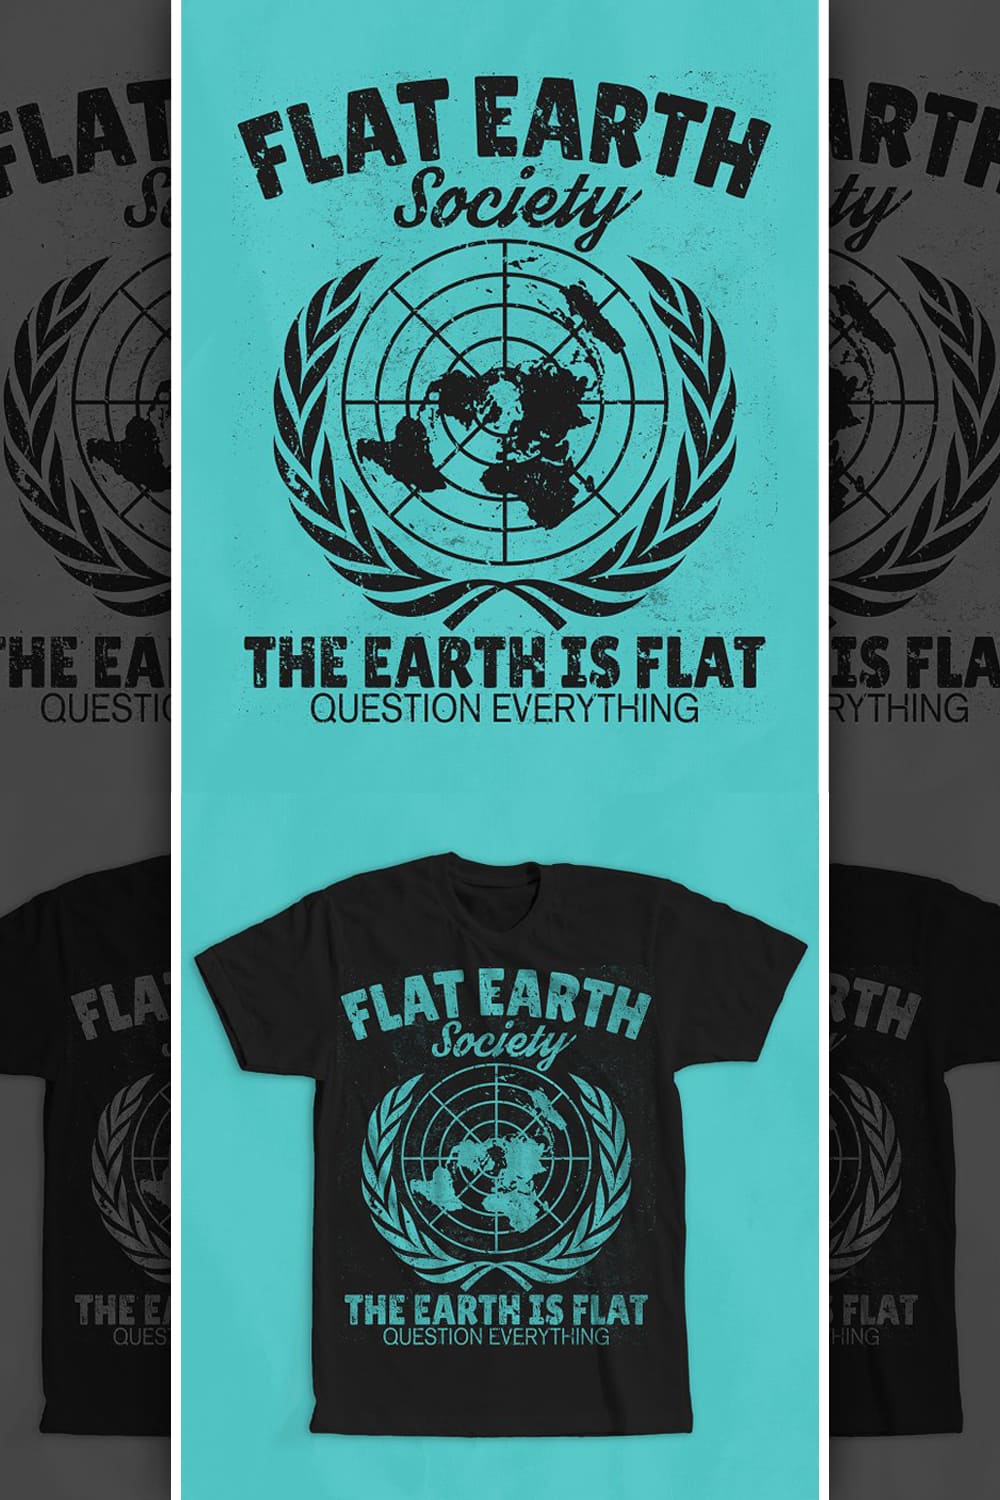 Flat Earth Society T-Shirt Design - Pinterest.